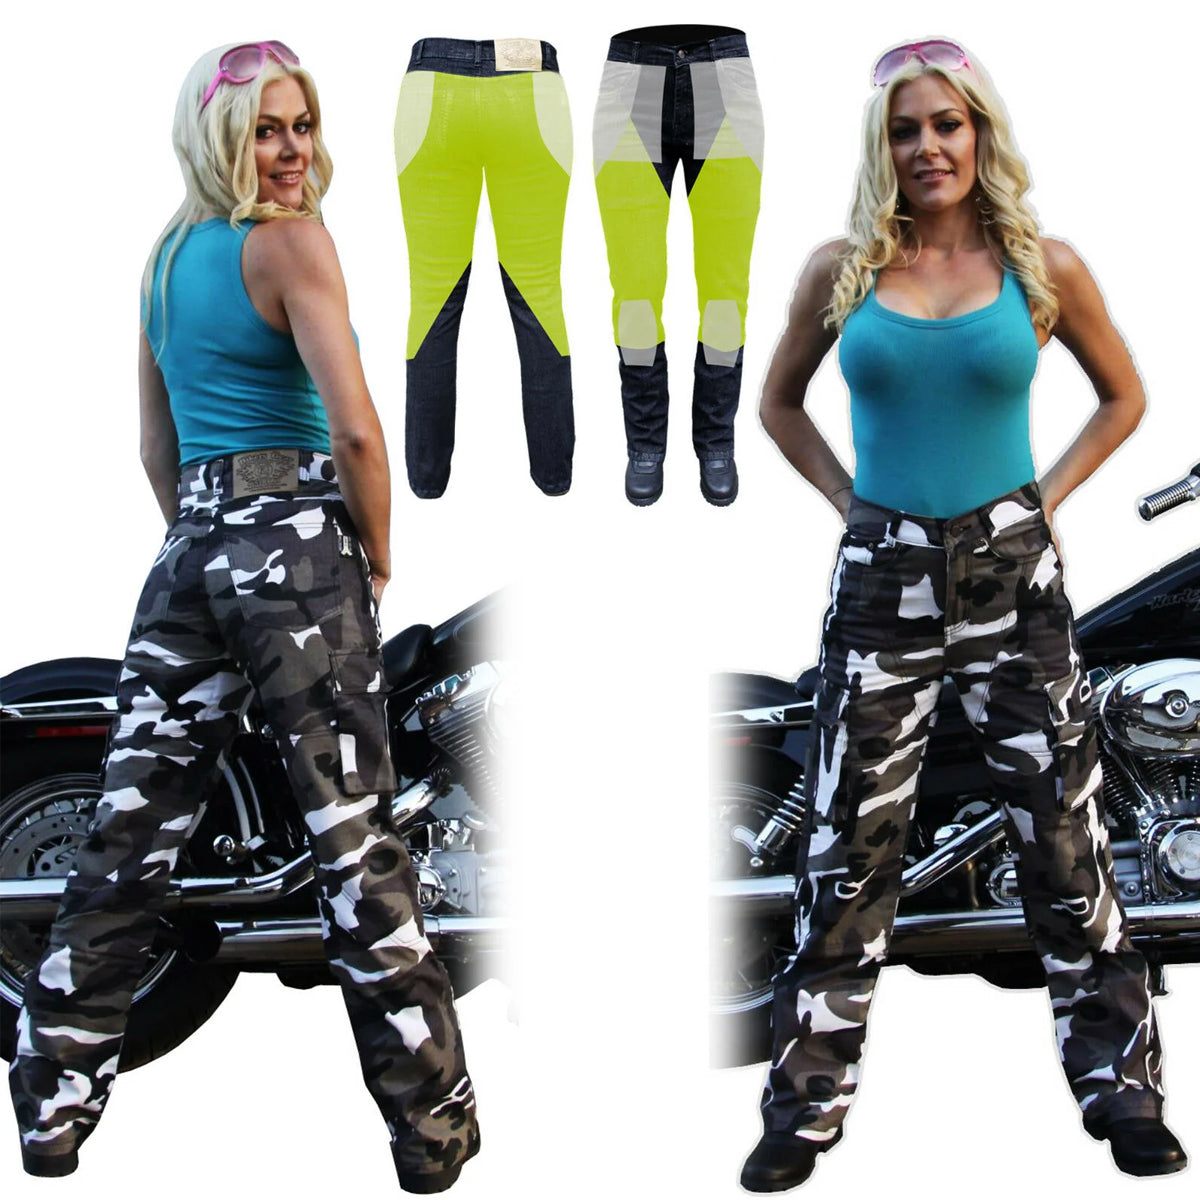 Bikers Gear Australia Hobart Lady Leather Motorcycle Pants